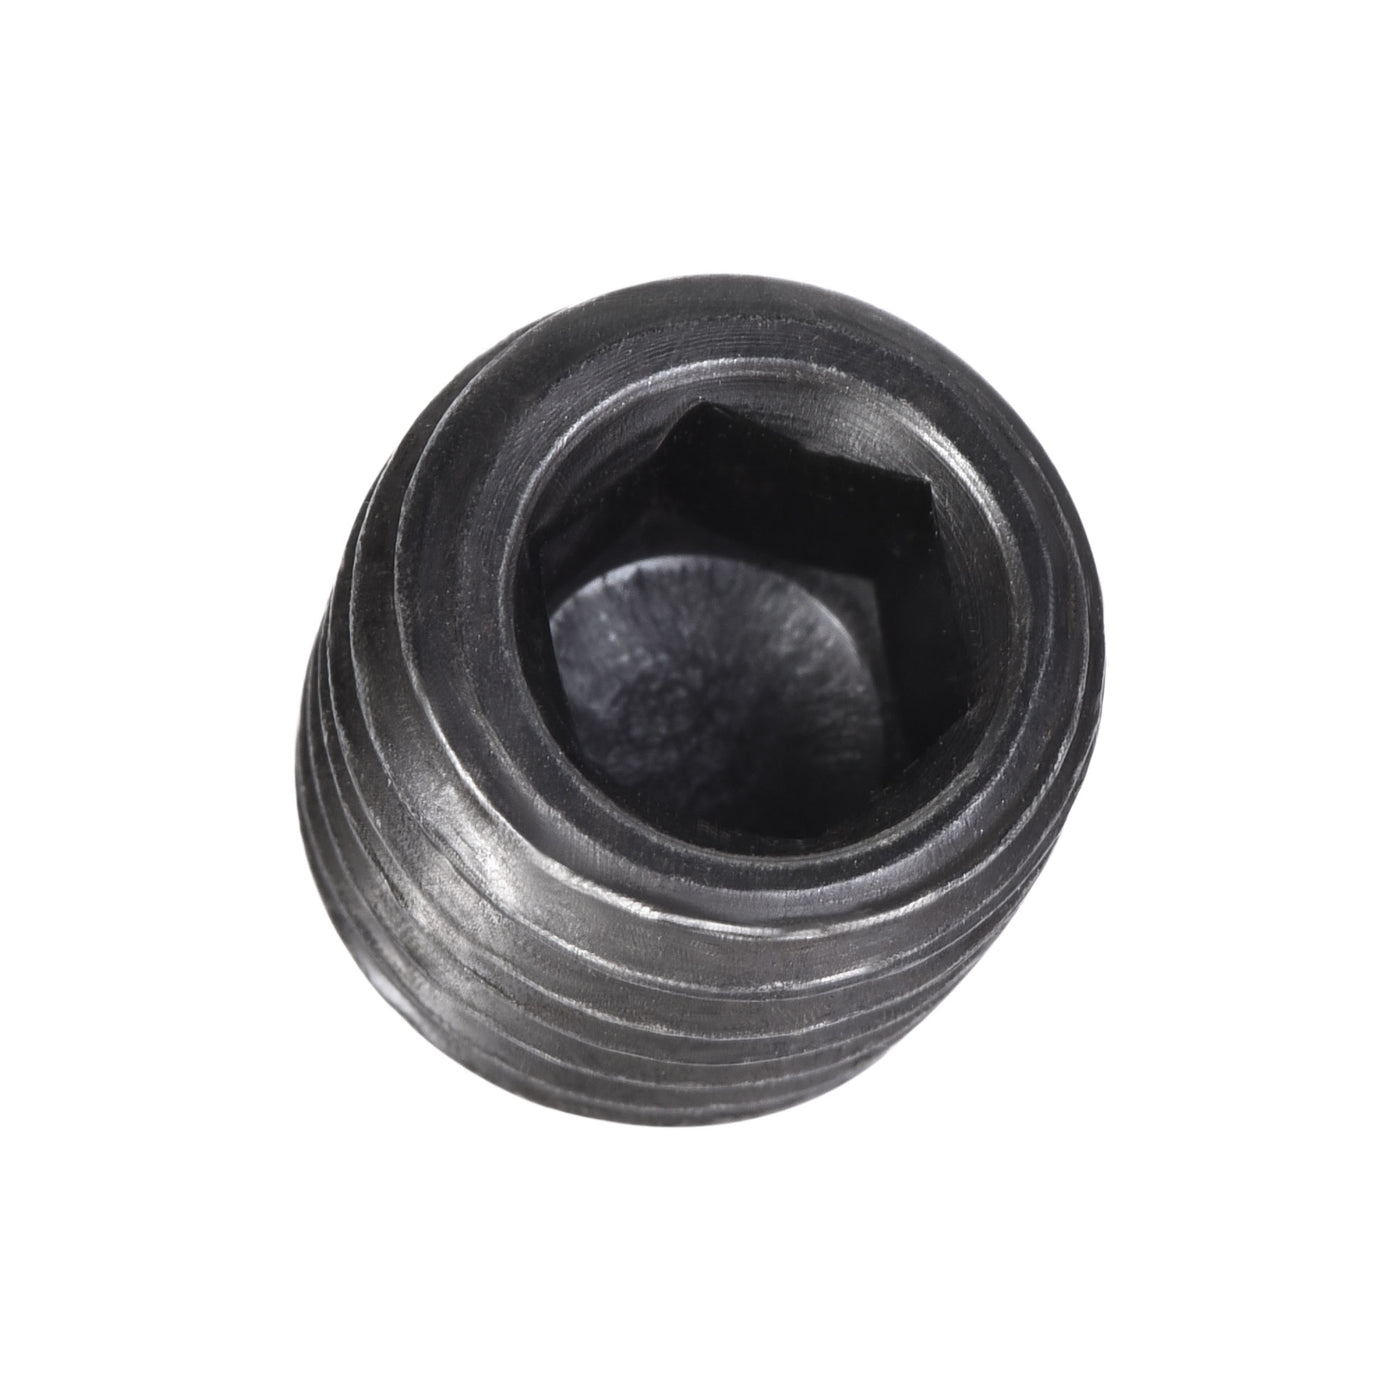 Uxcell Uxcell Carbon Steel Internal Hex Thread Socket Pipe Plug M22x1.5 Male Thread Black 5Pcs